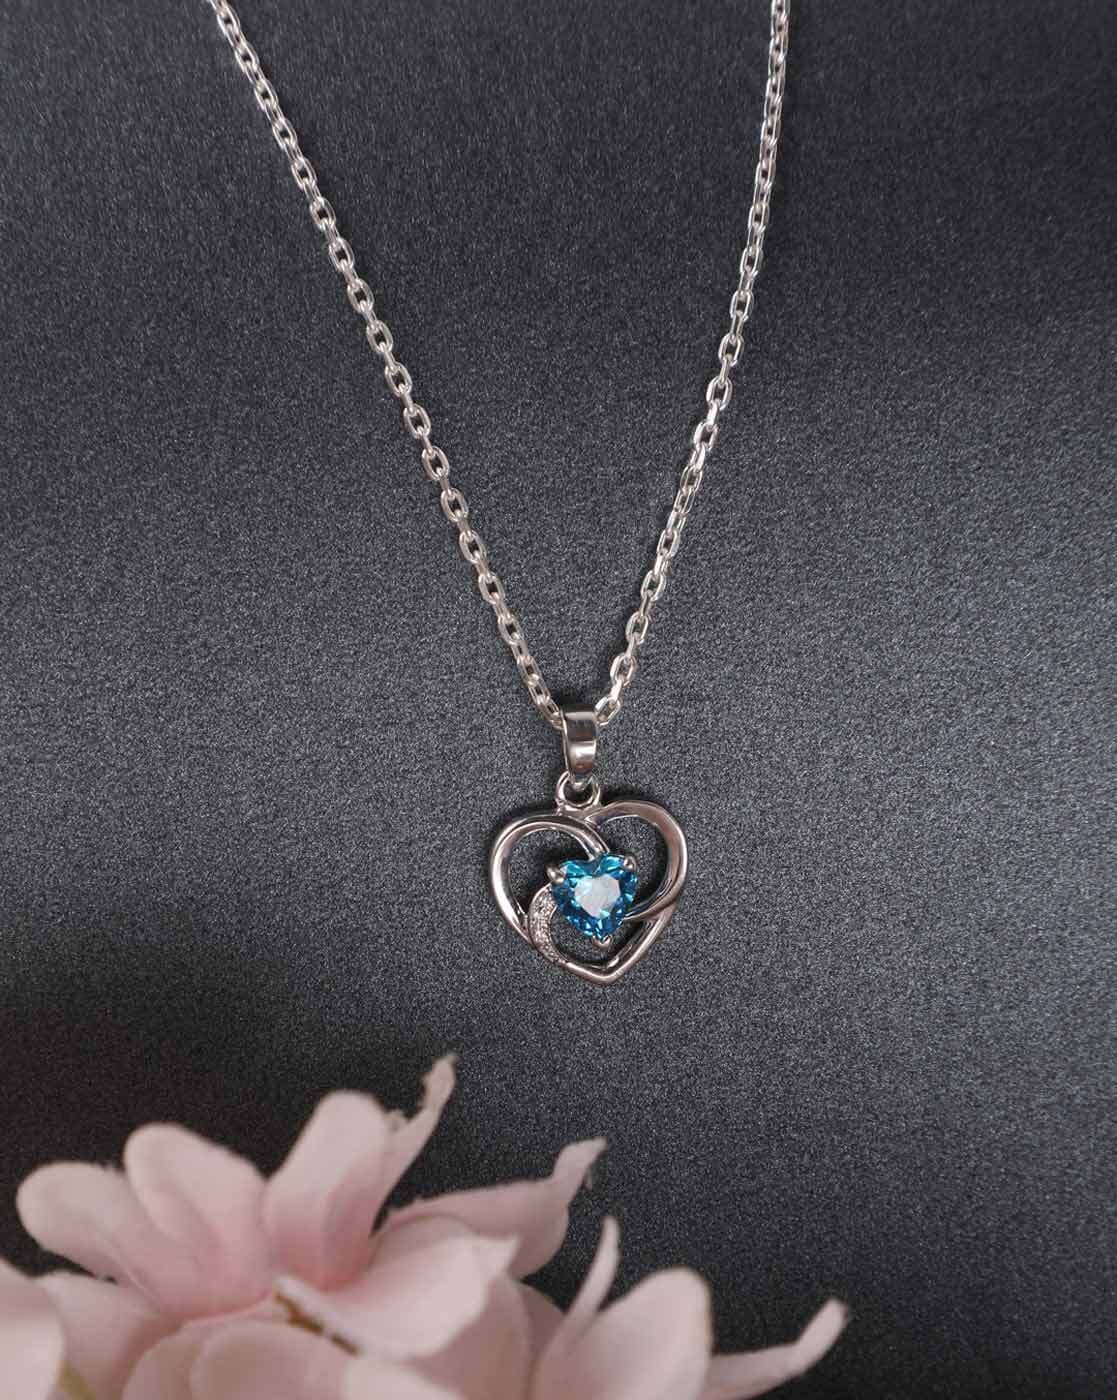 Buy TEEJH Niranjana Light Blue Stone Silver Oxidized Necklace Set For Women  at Amazon.in